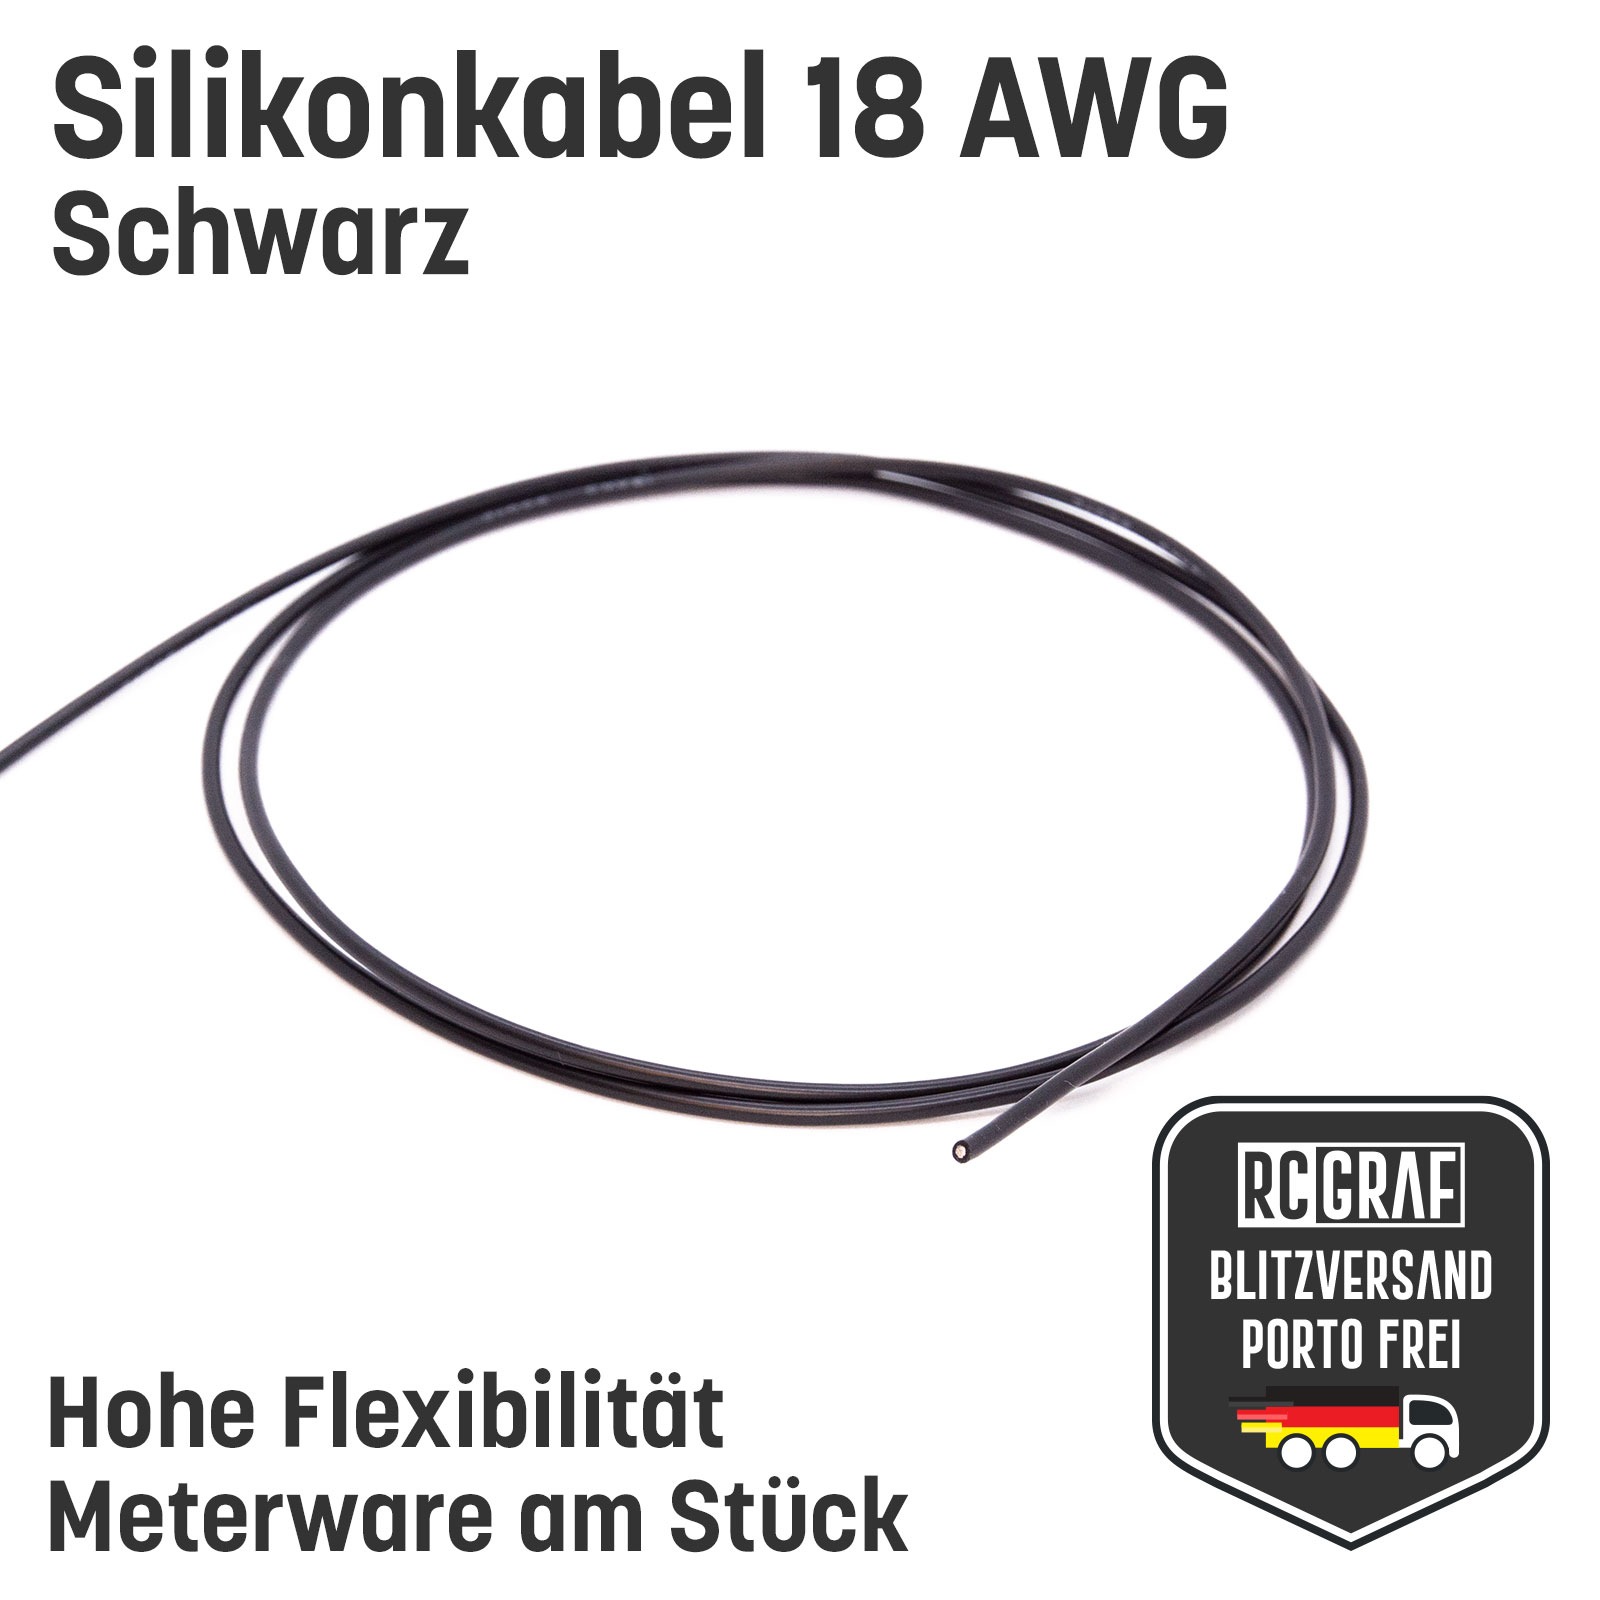 Silikonkabel 18 AWG 10 Meter Schwarz hochflexibel